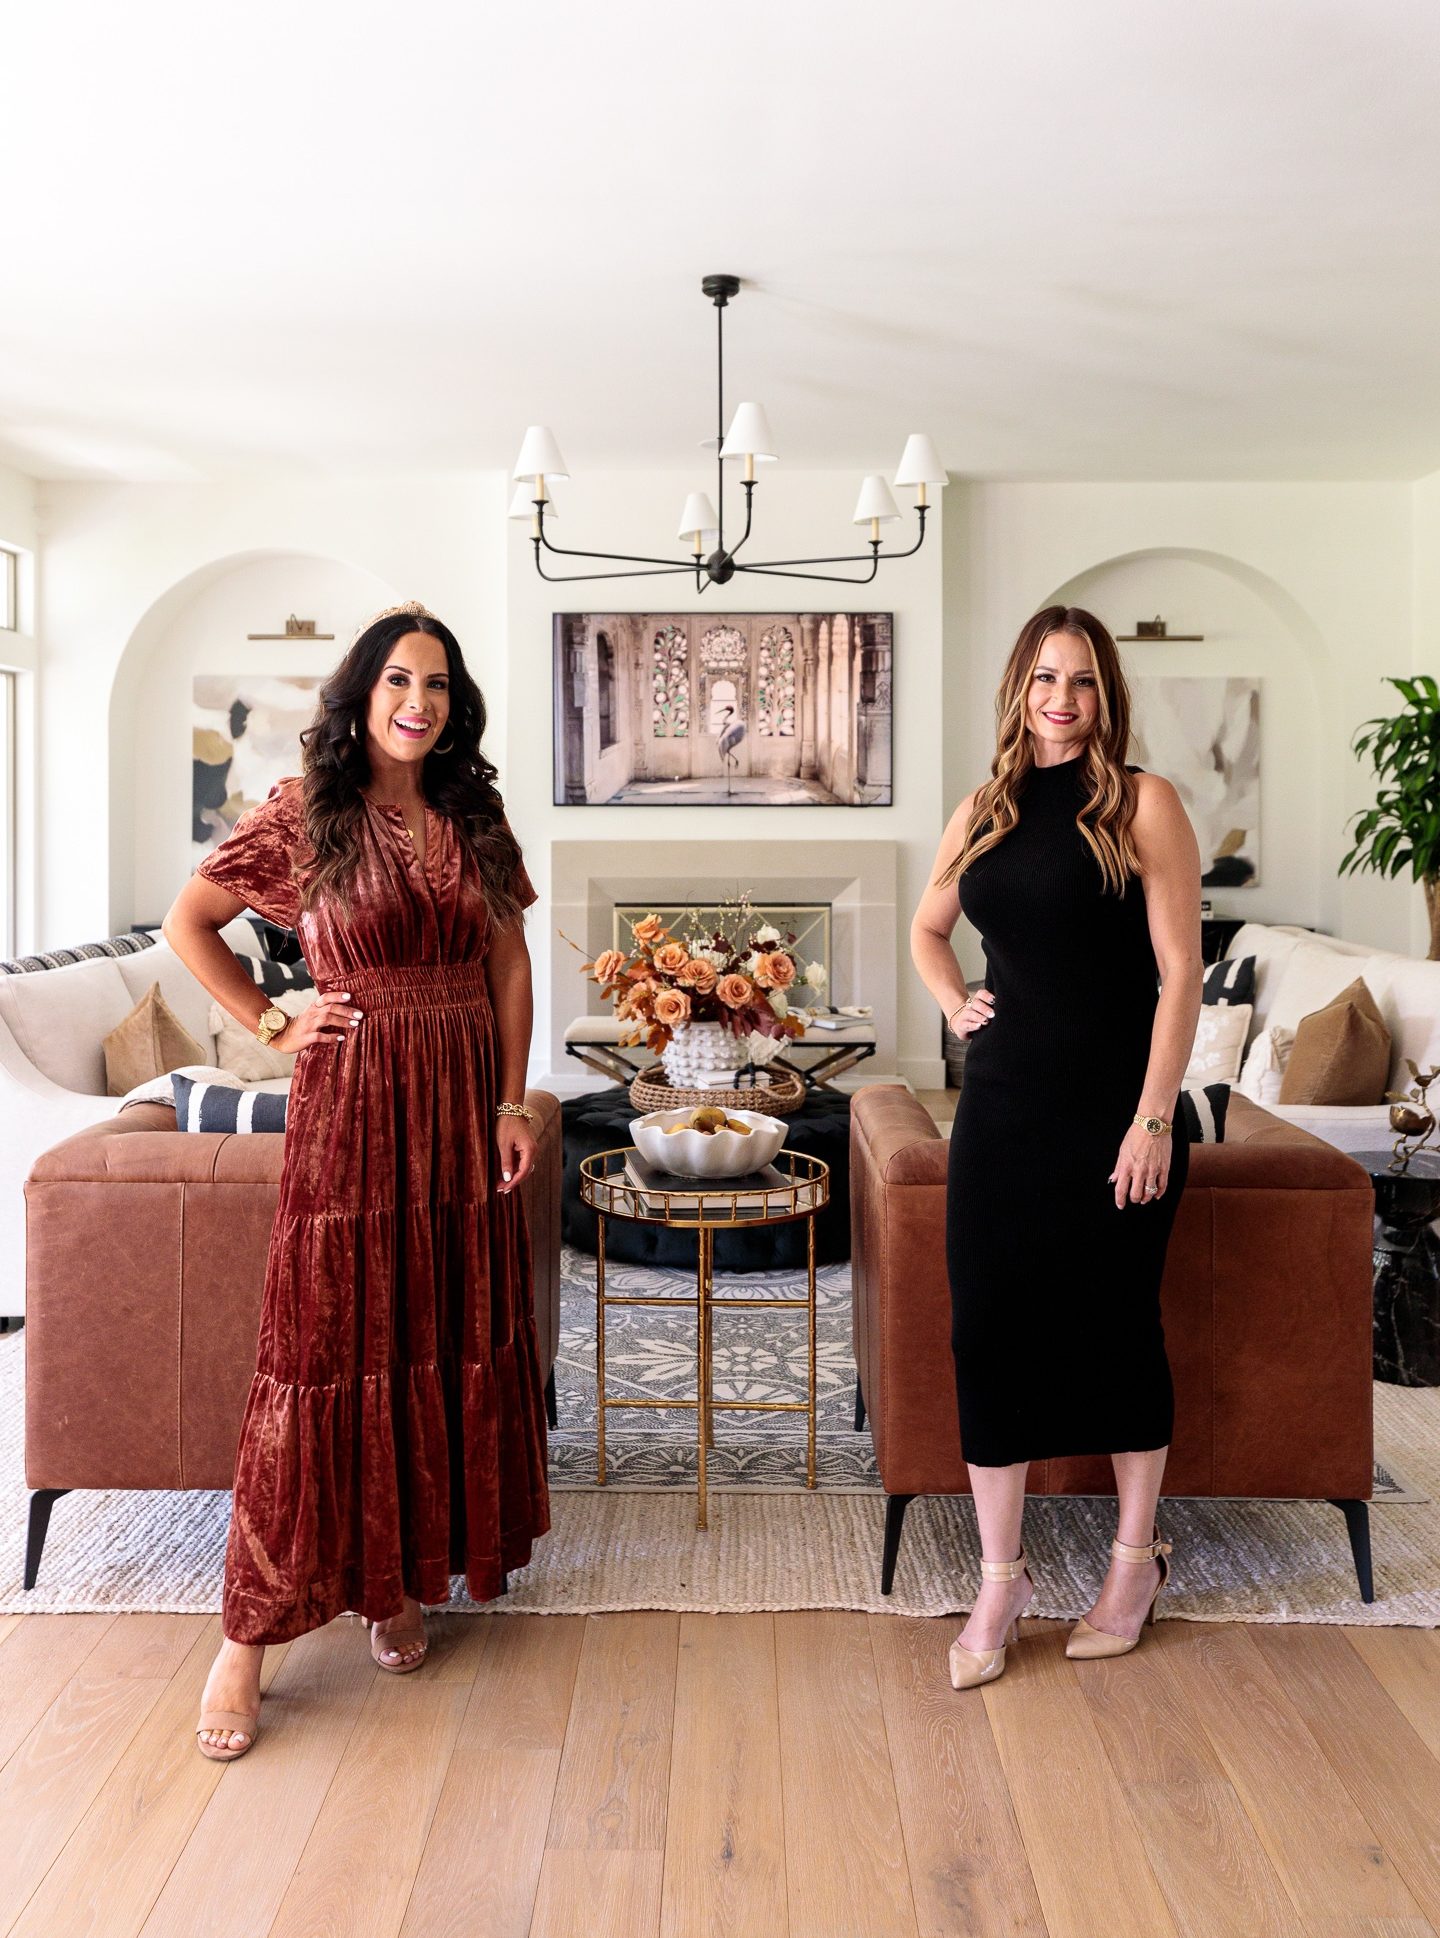 Lindsay's Chic Black & White Living Room Reveal - The Double Take Girls